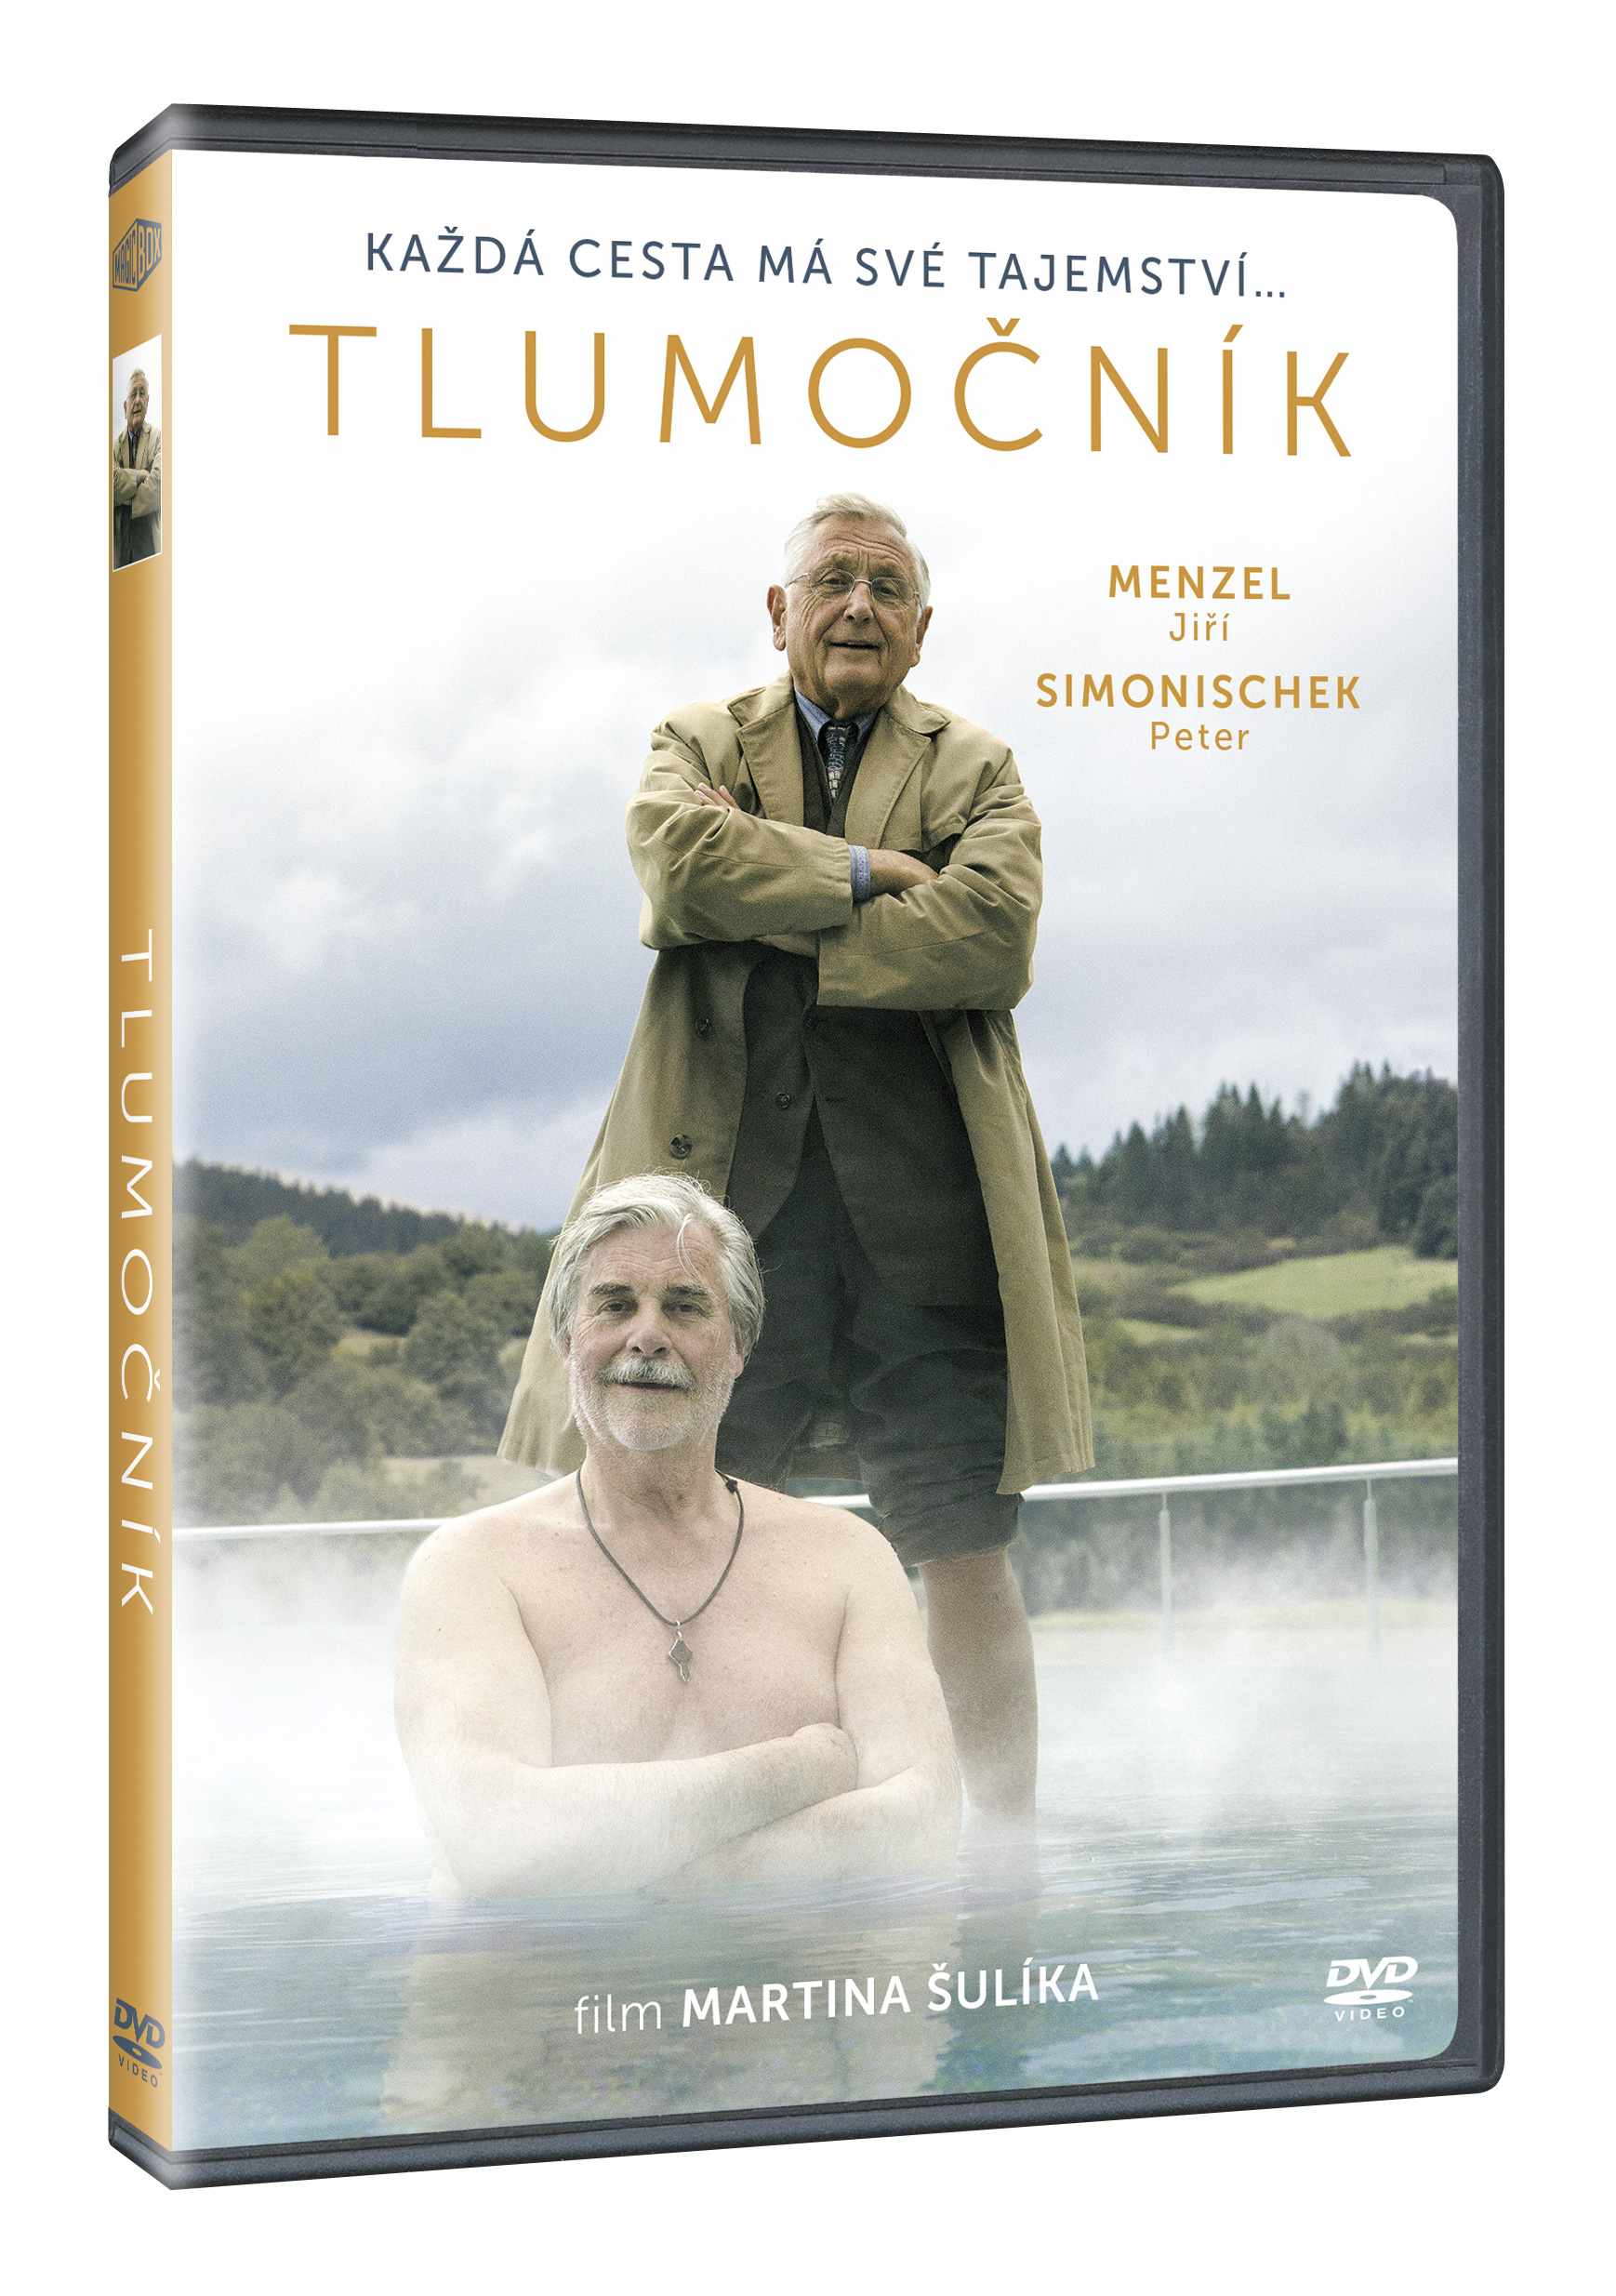 Die Dolmetscherin / Tlumocnik DVD